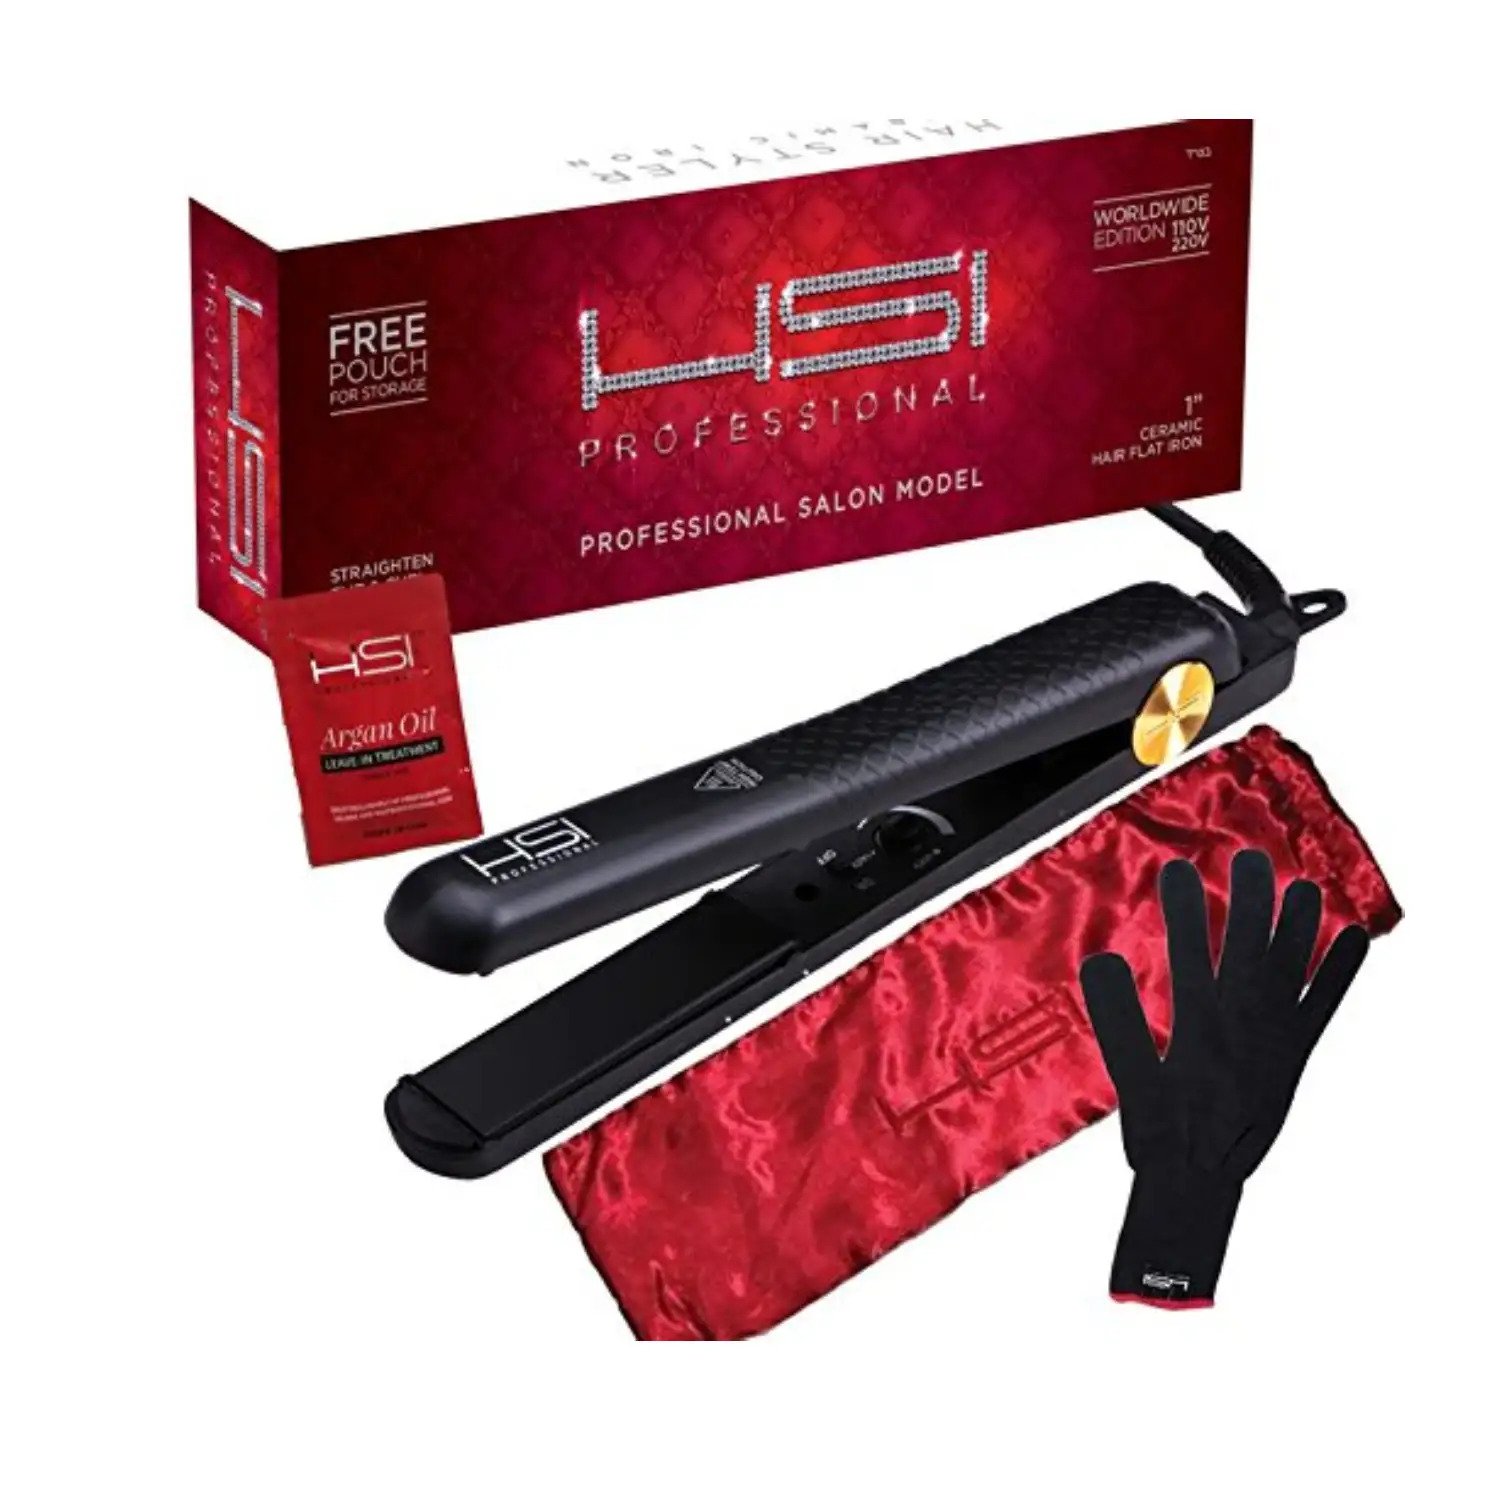 HSI Professional Glider Ceramic Tourmaline Ionic Flat Iron Hair Straightener - $27.99 + Free Shipping